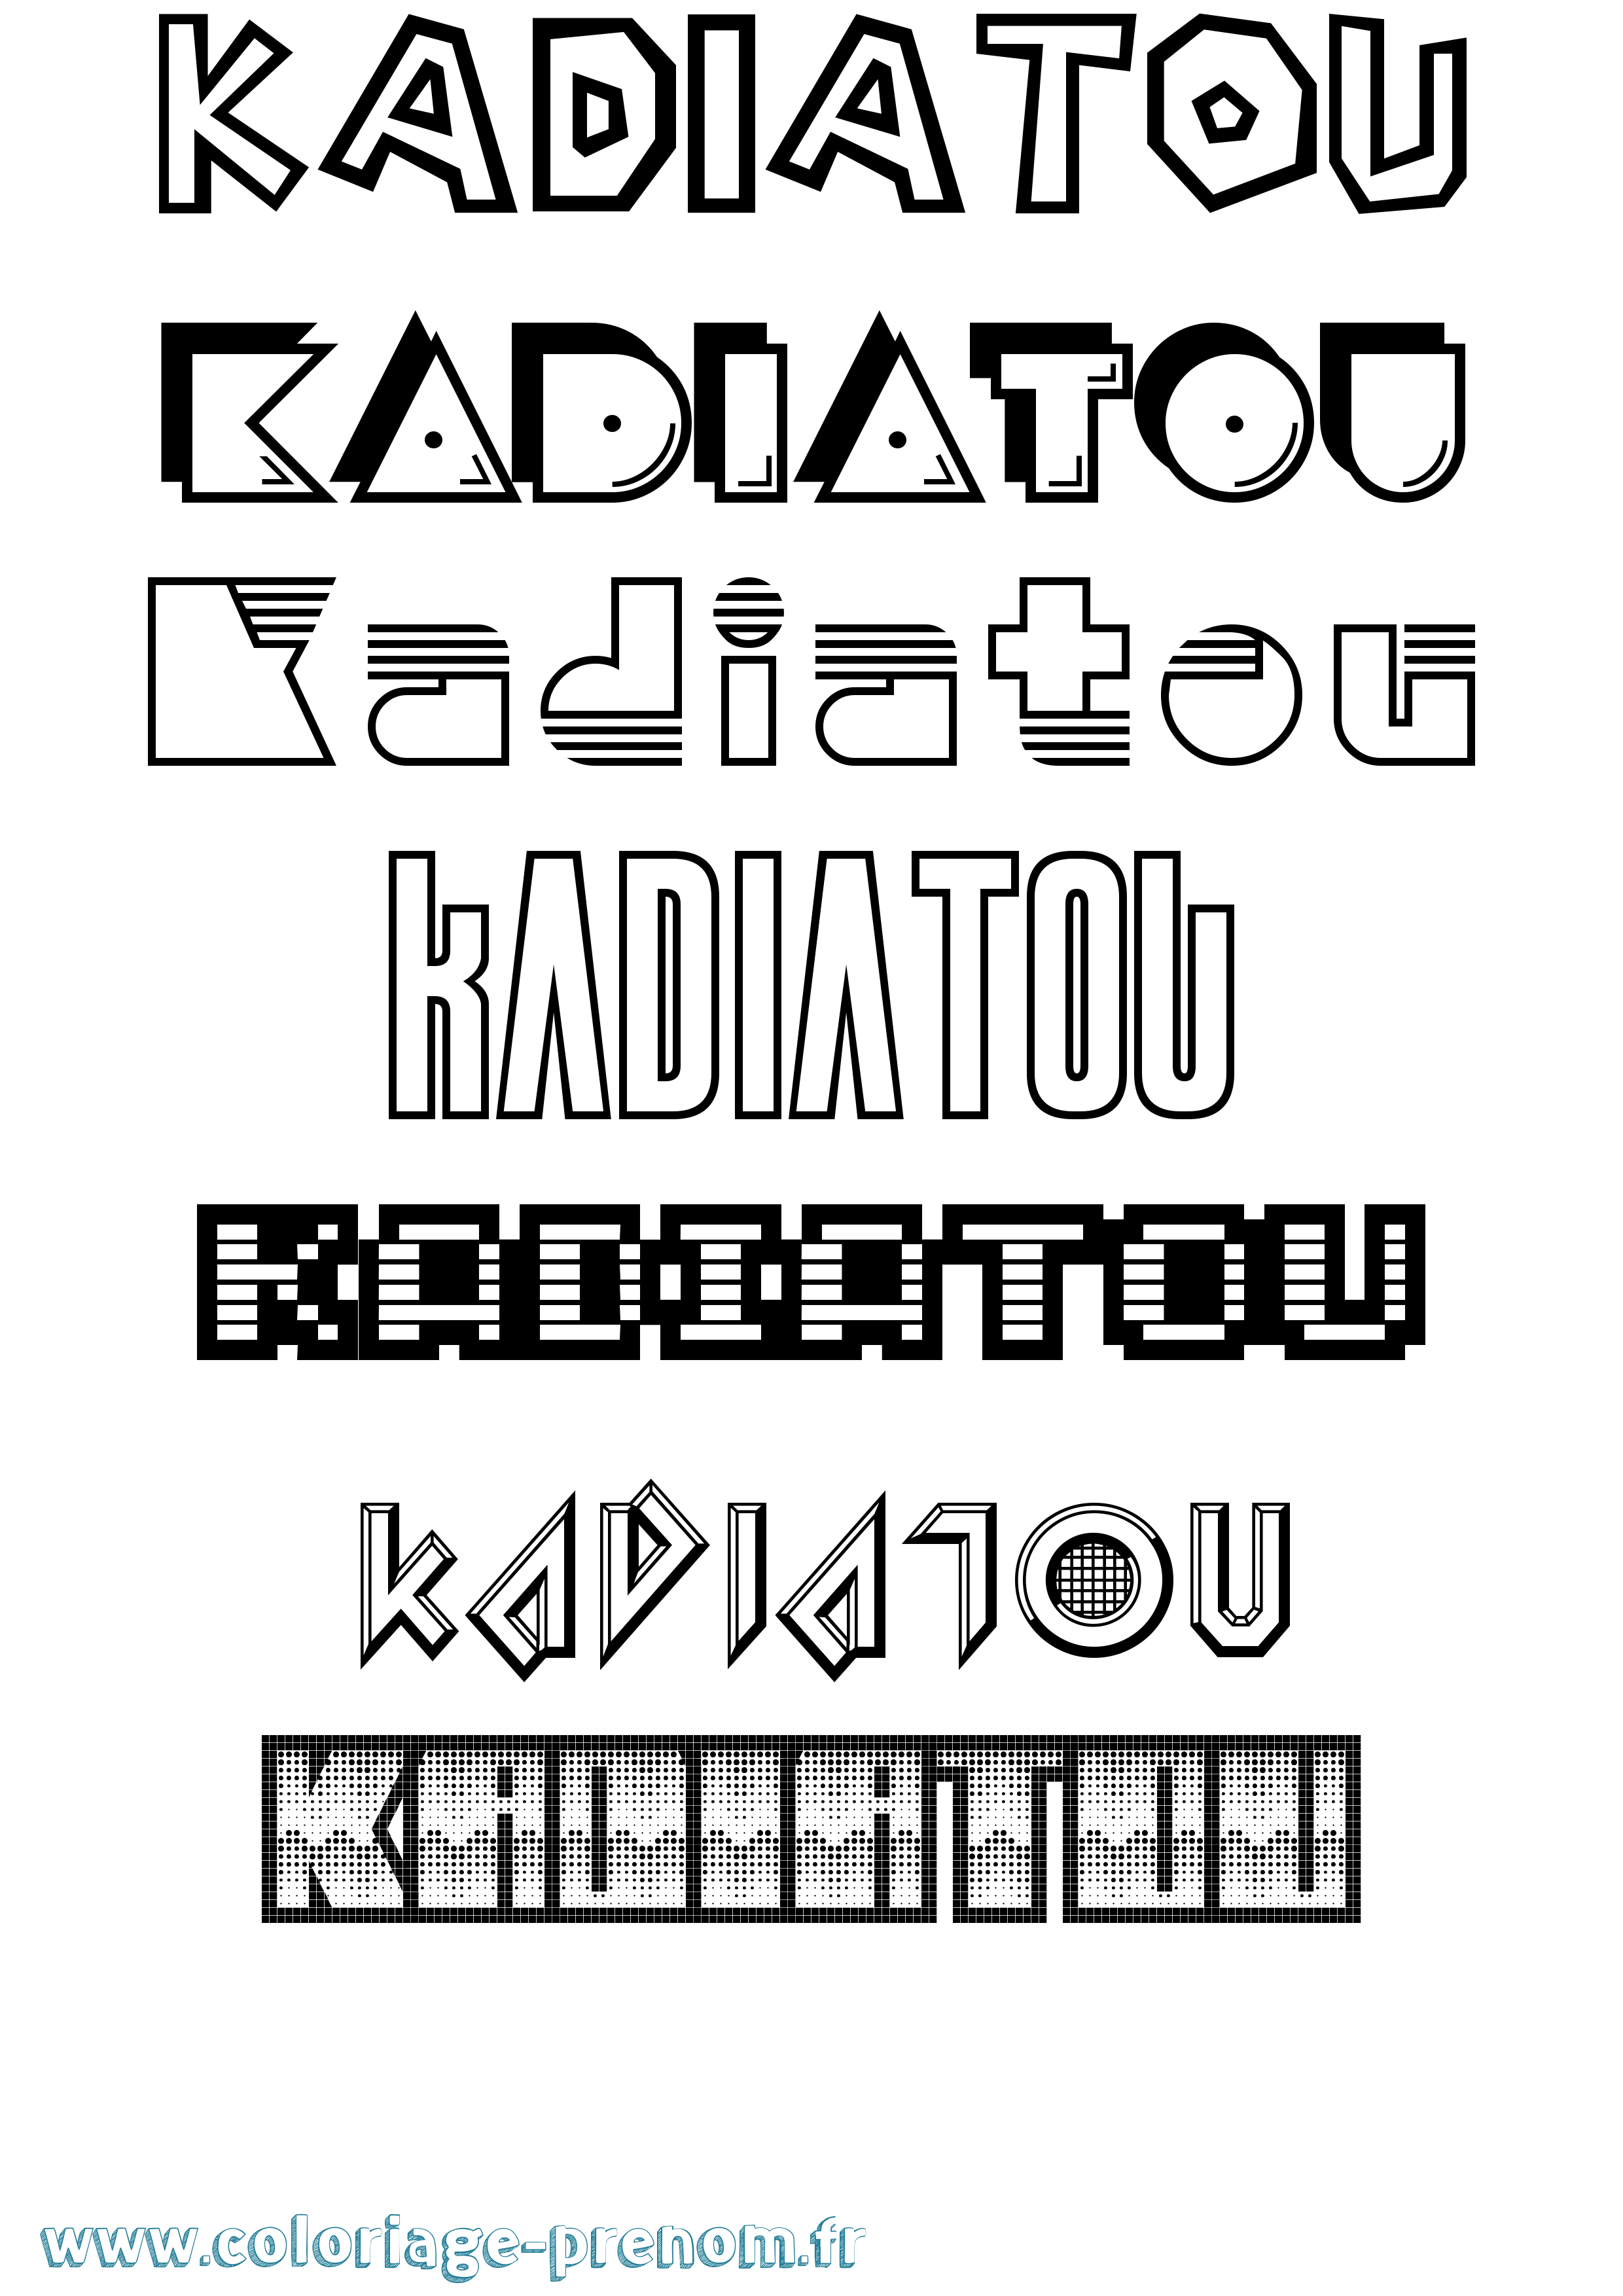 Coloriage prénom Kadiatou